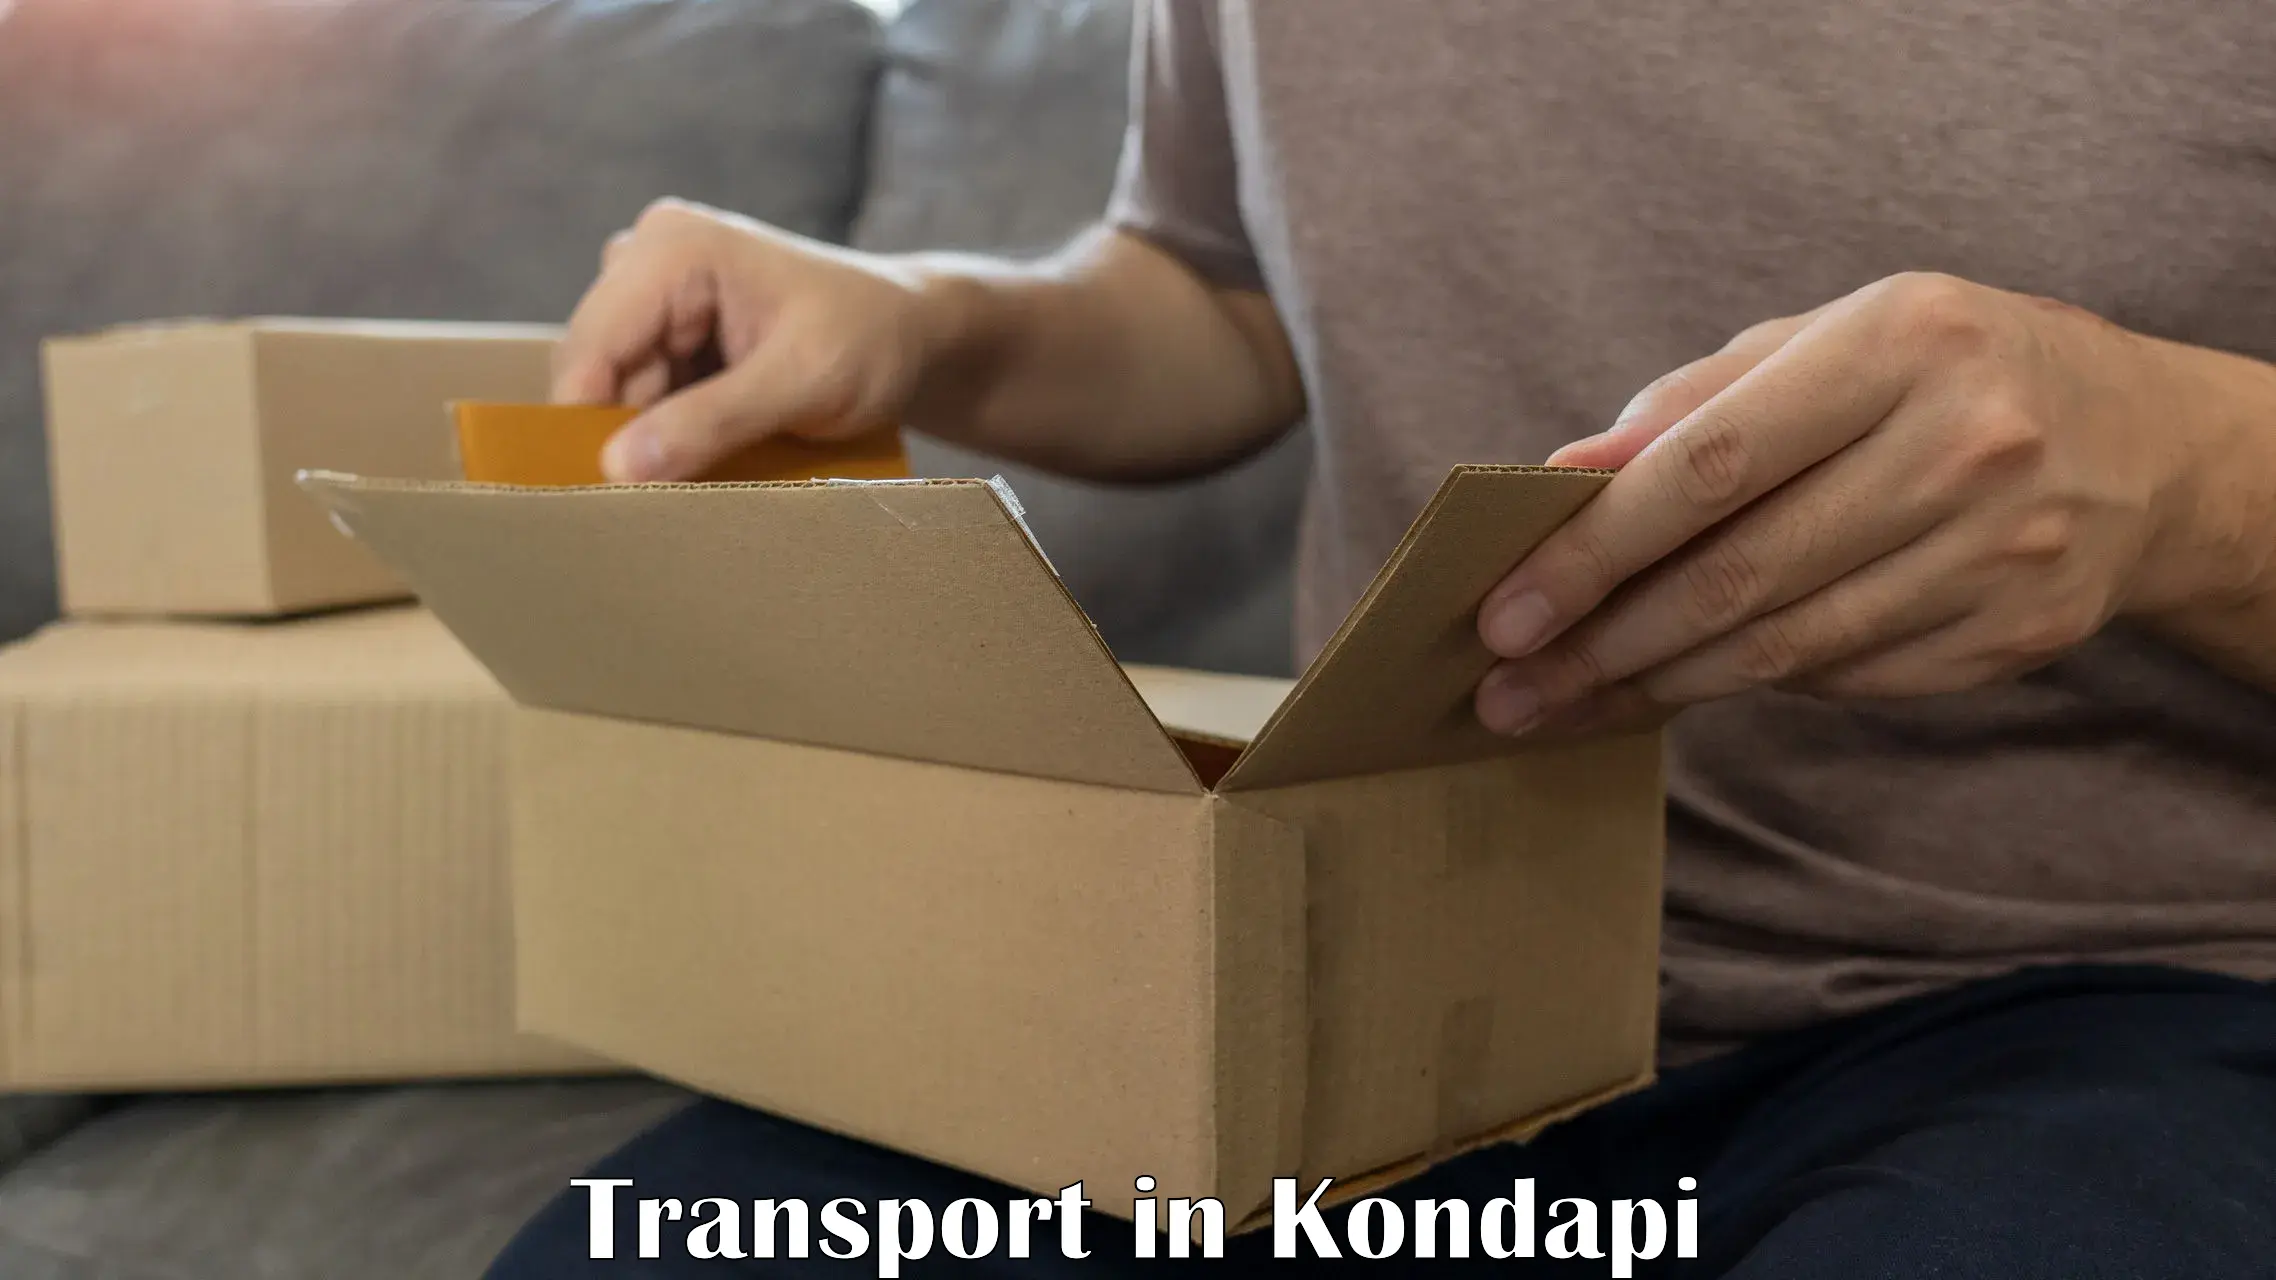 Interstate goods transport in Kondapi